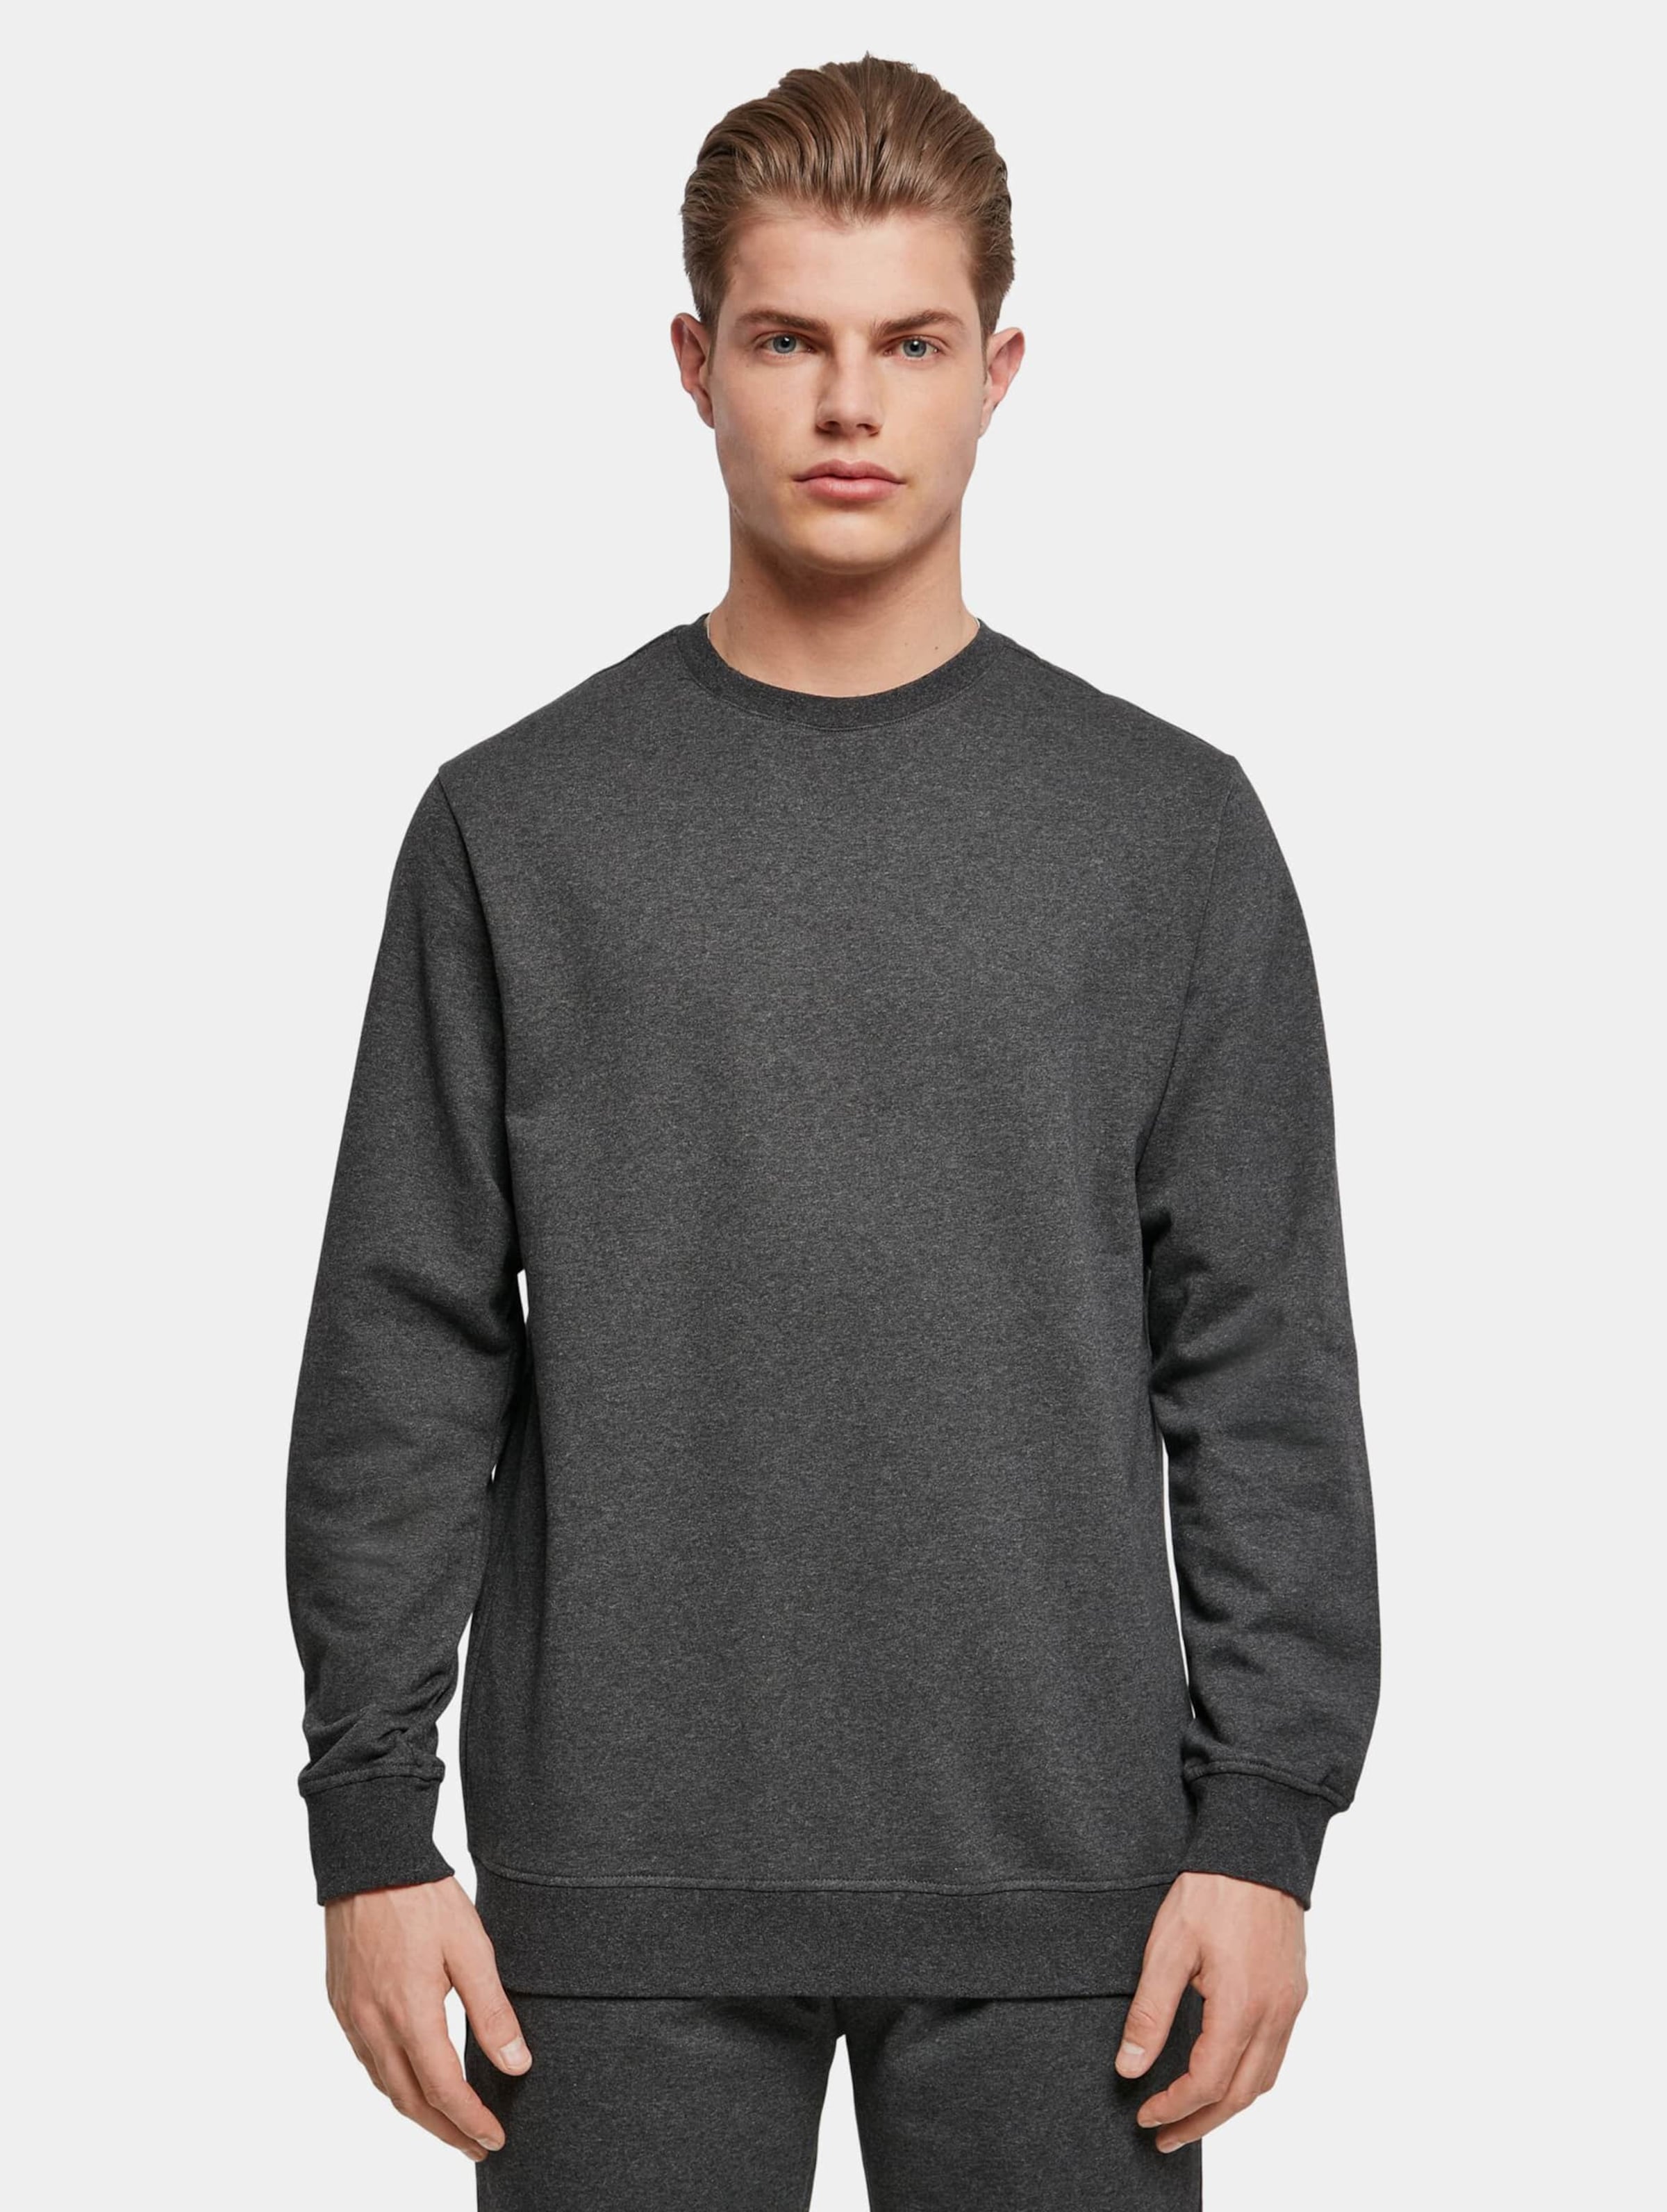 Basic Crewneck Sweater met ronde hals Charcoal - 3XL